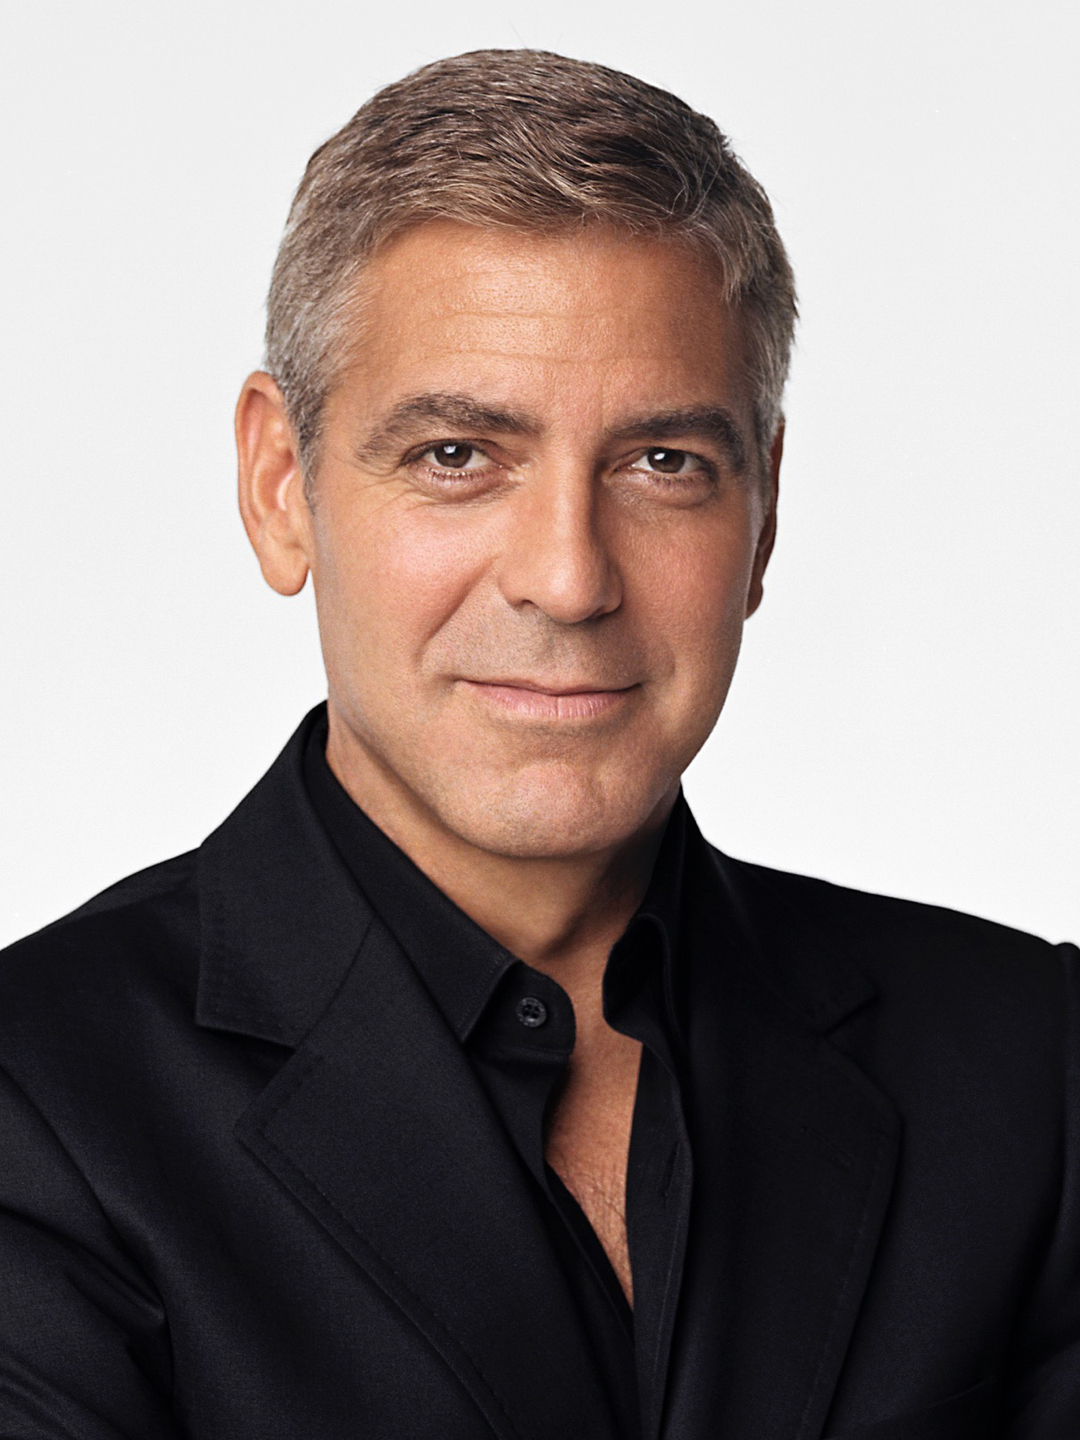 George Clooney high school pics